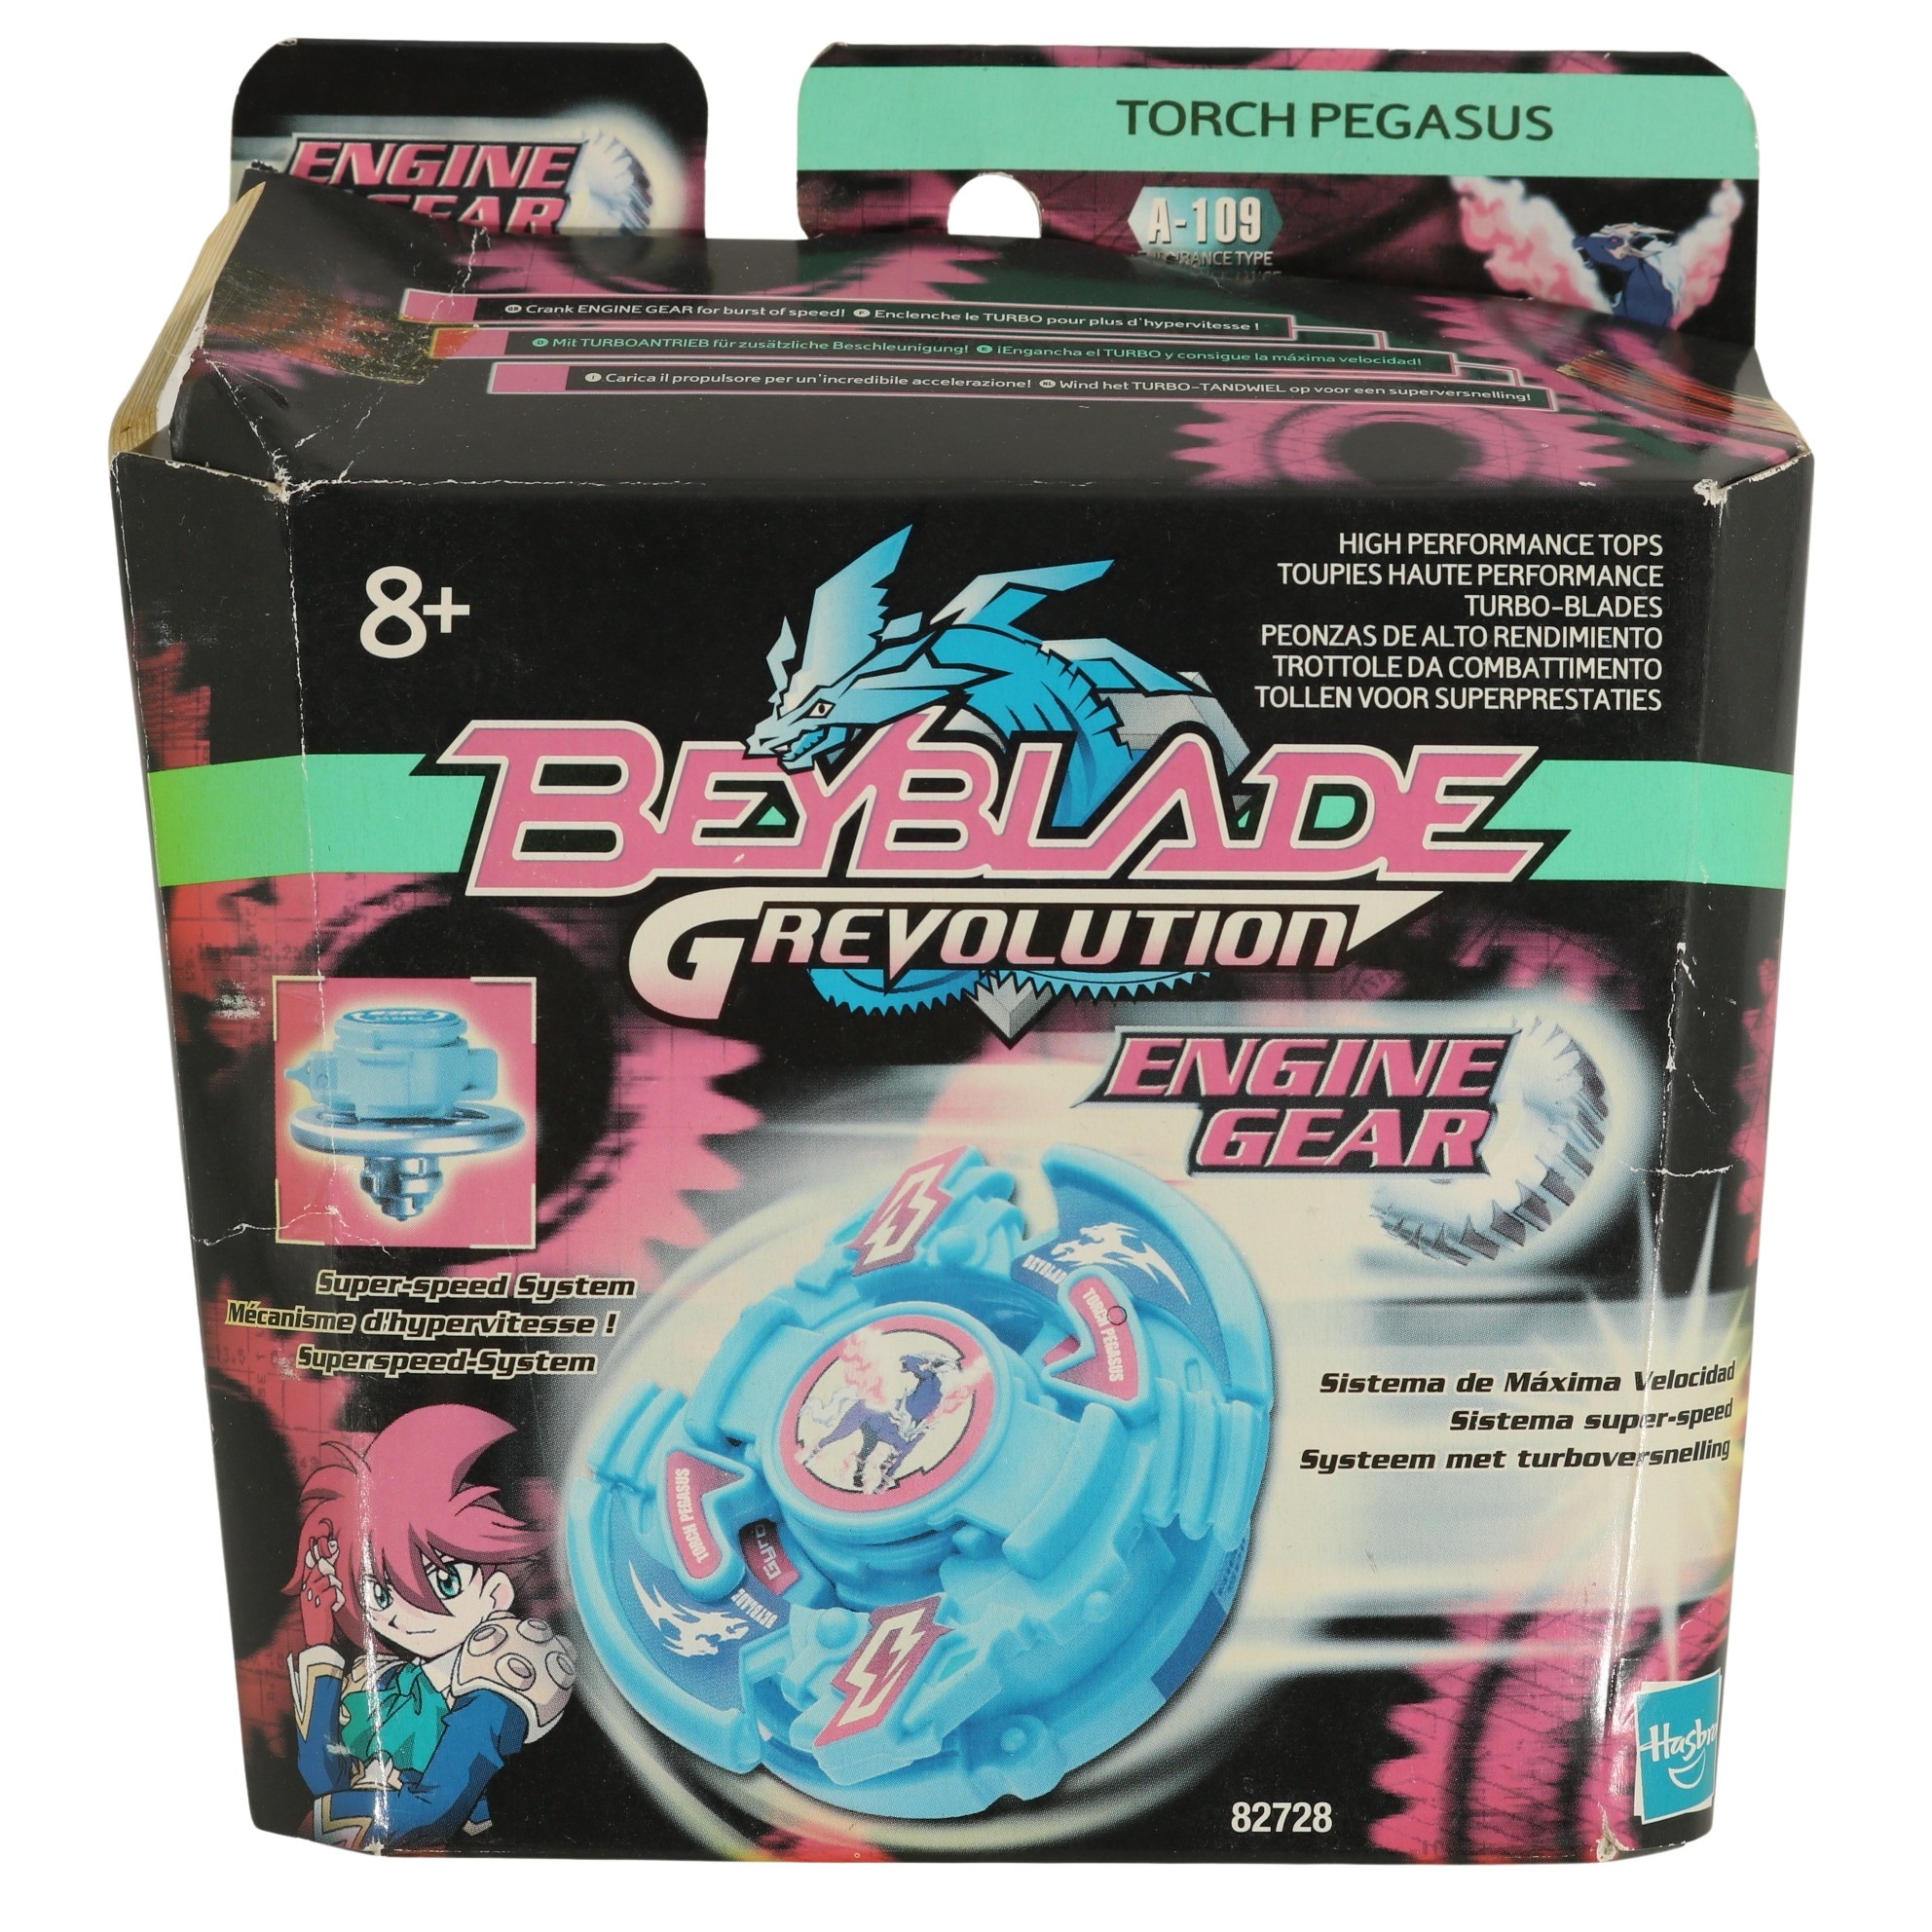 Hasbro Beyblade Grevolution - Torch Pegasus - MISB